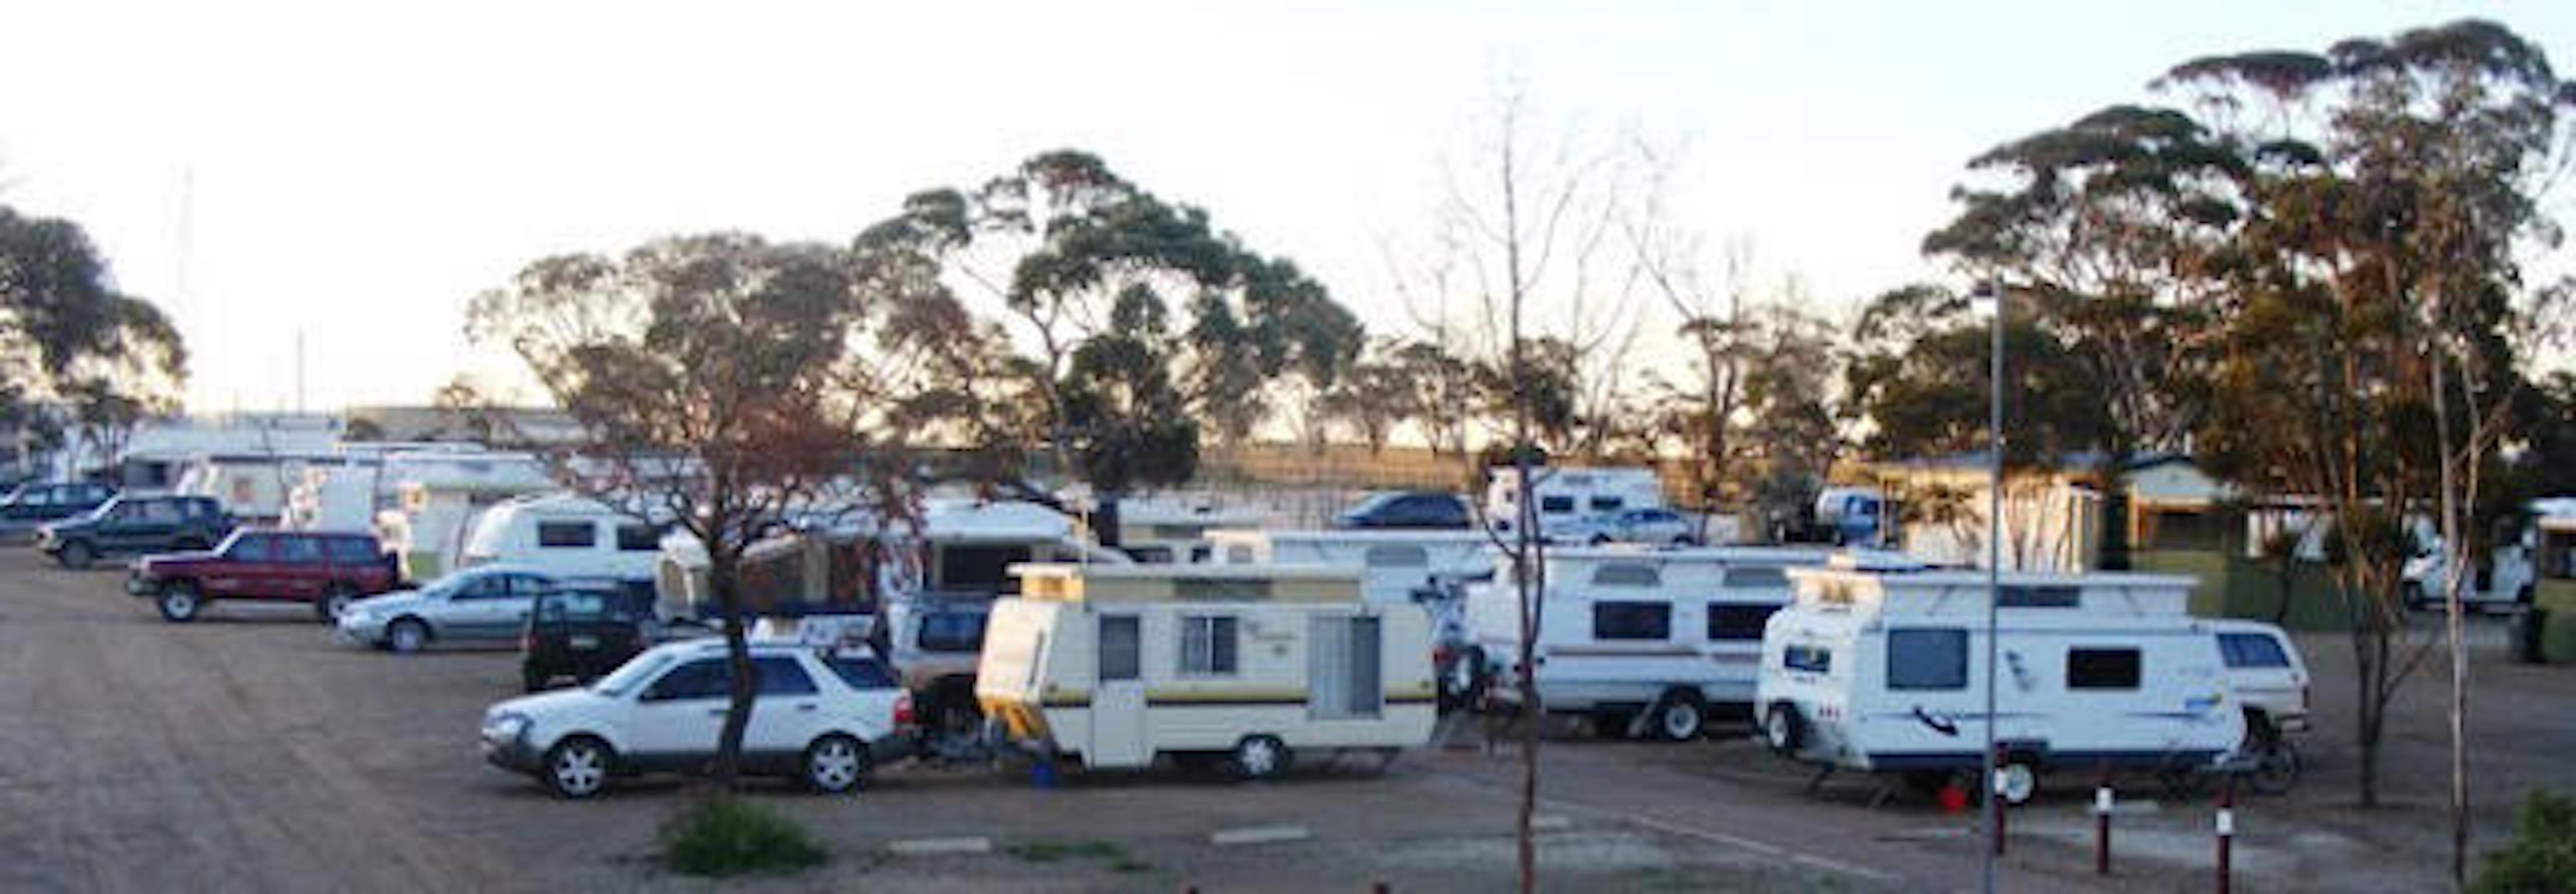 Woomera Traveller's Village and Caravan Park - Carnarvon Accommodation